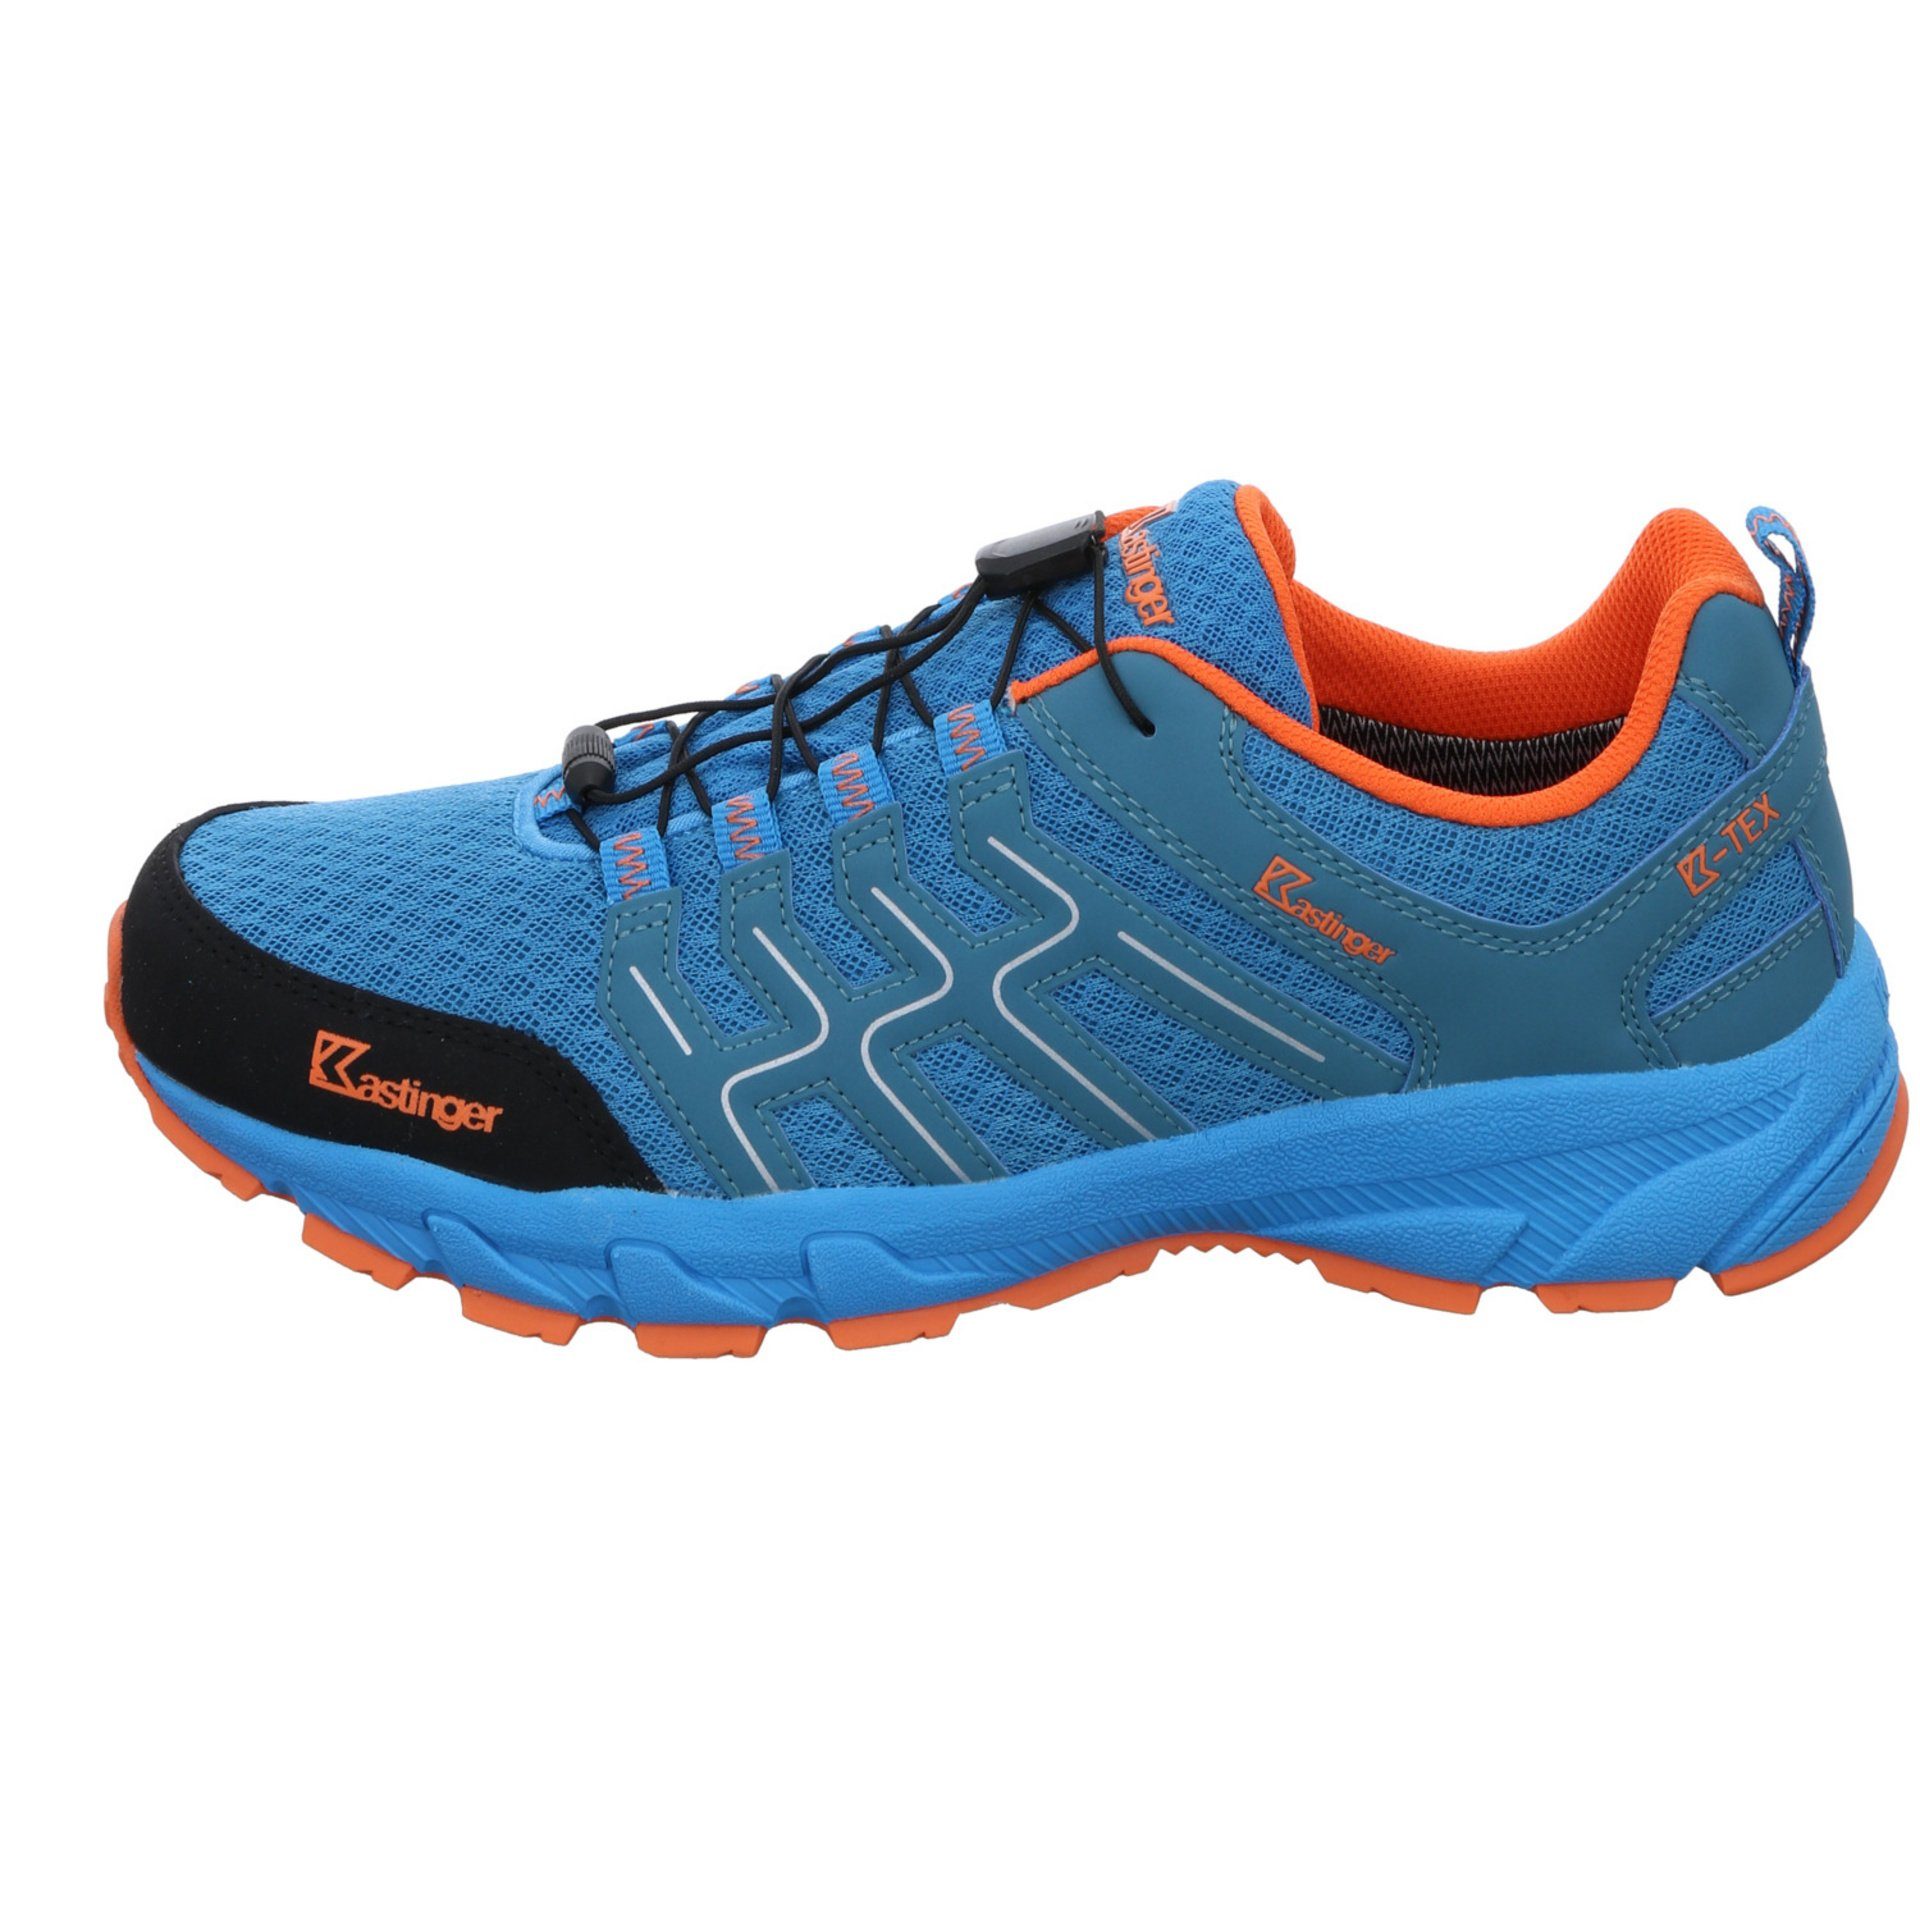 Damen Synthetikkombination Kastinger Trailrunner Schuhe Outdoorschuh Outdoor Outdoorschuh blue/orange